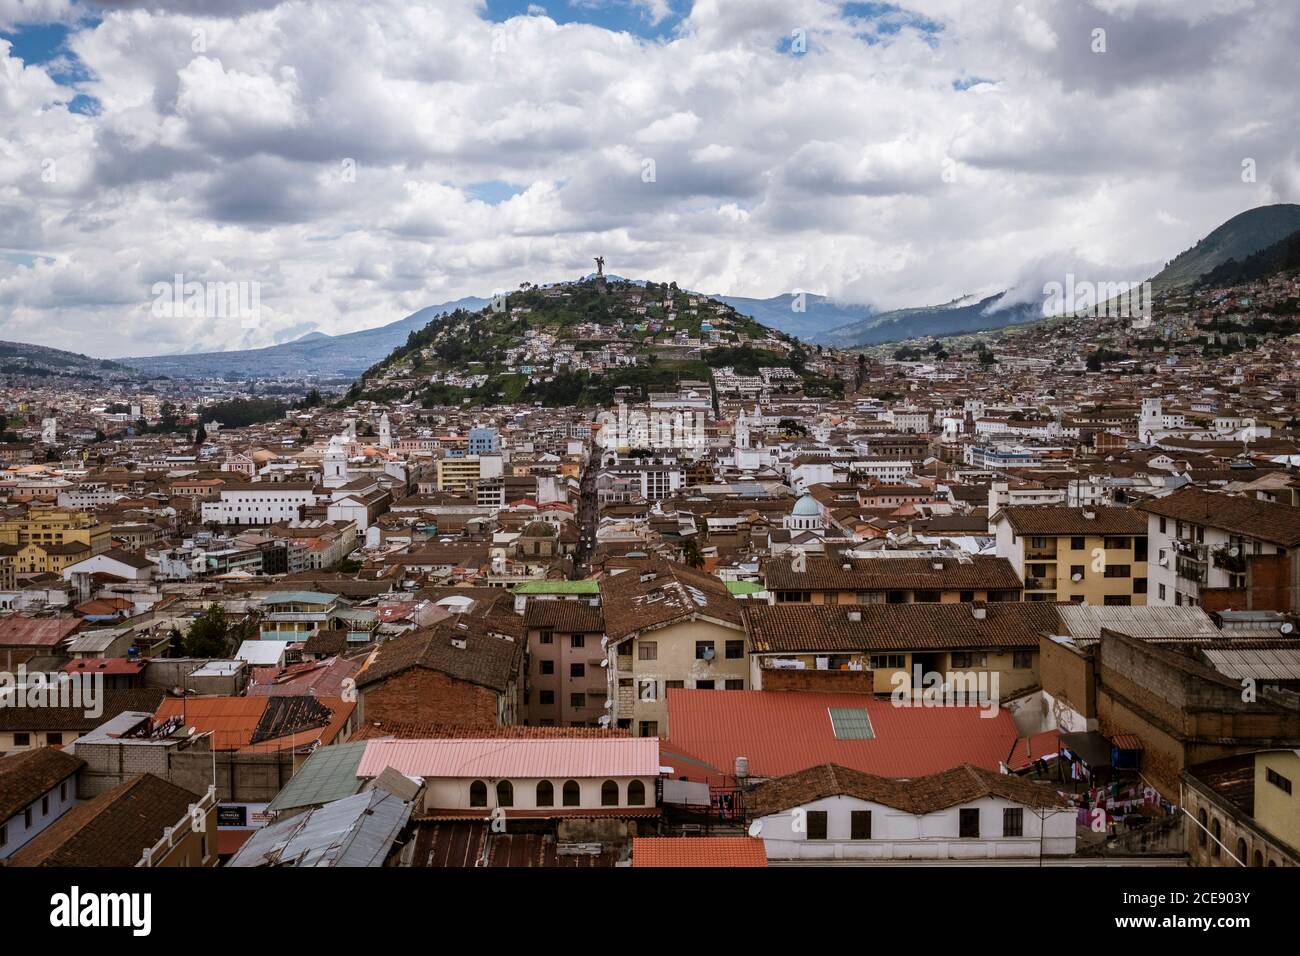 Bild von Quito's kolonialem Zentrum. Stockfoto